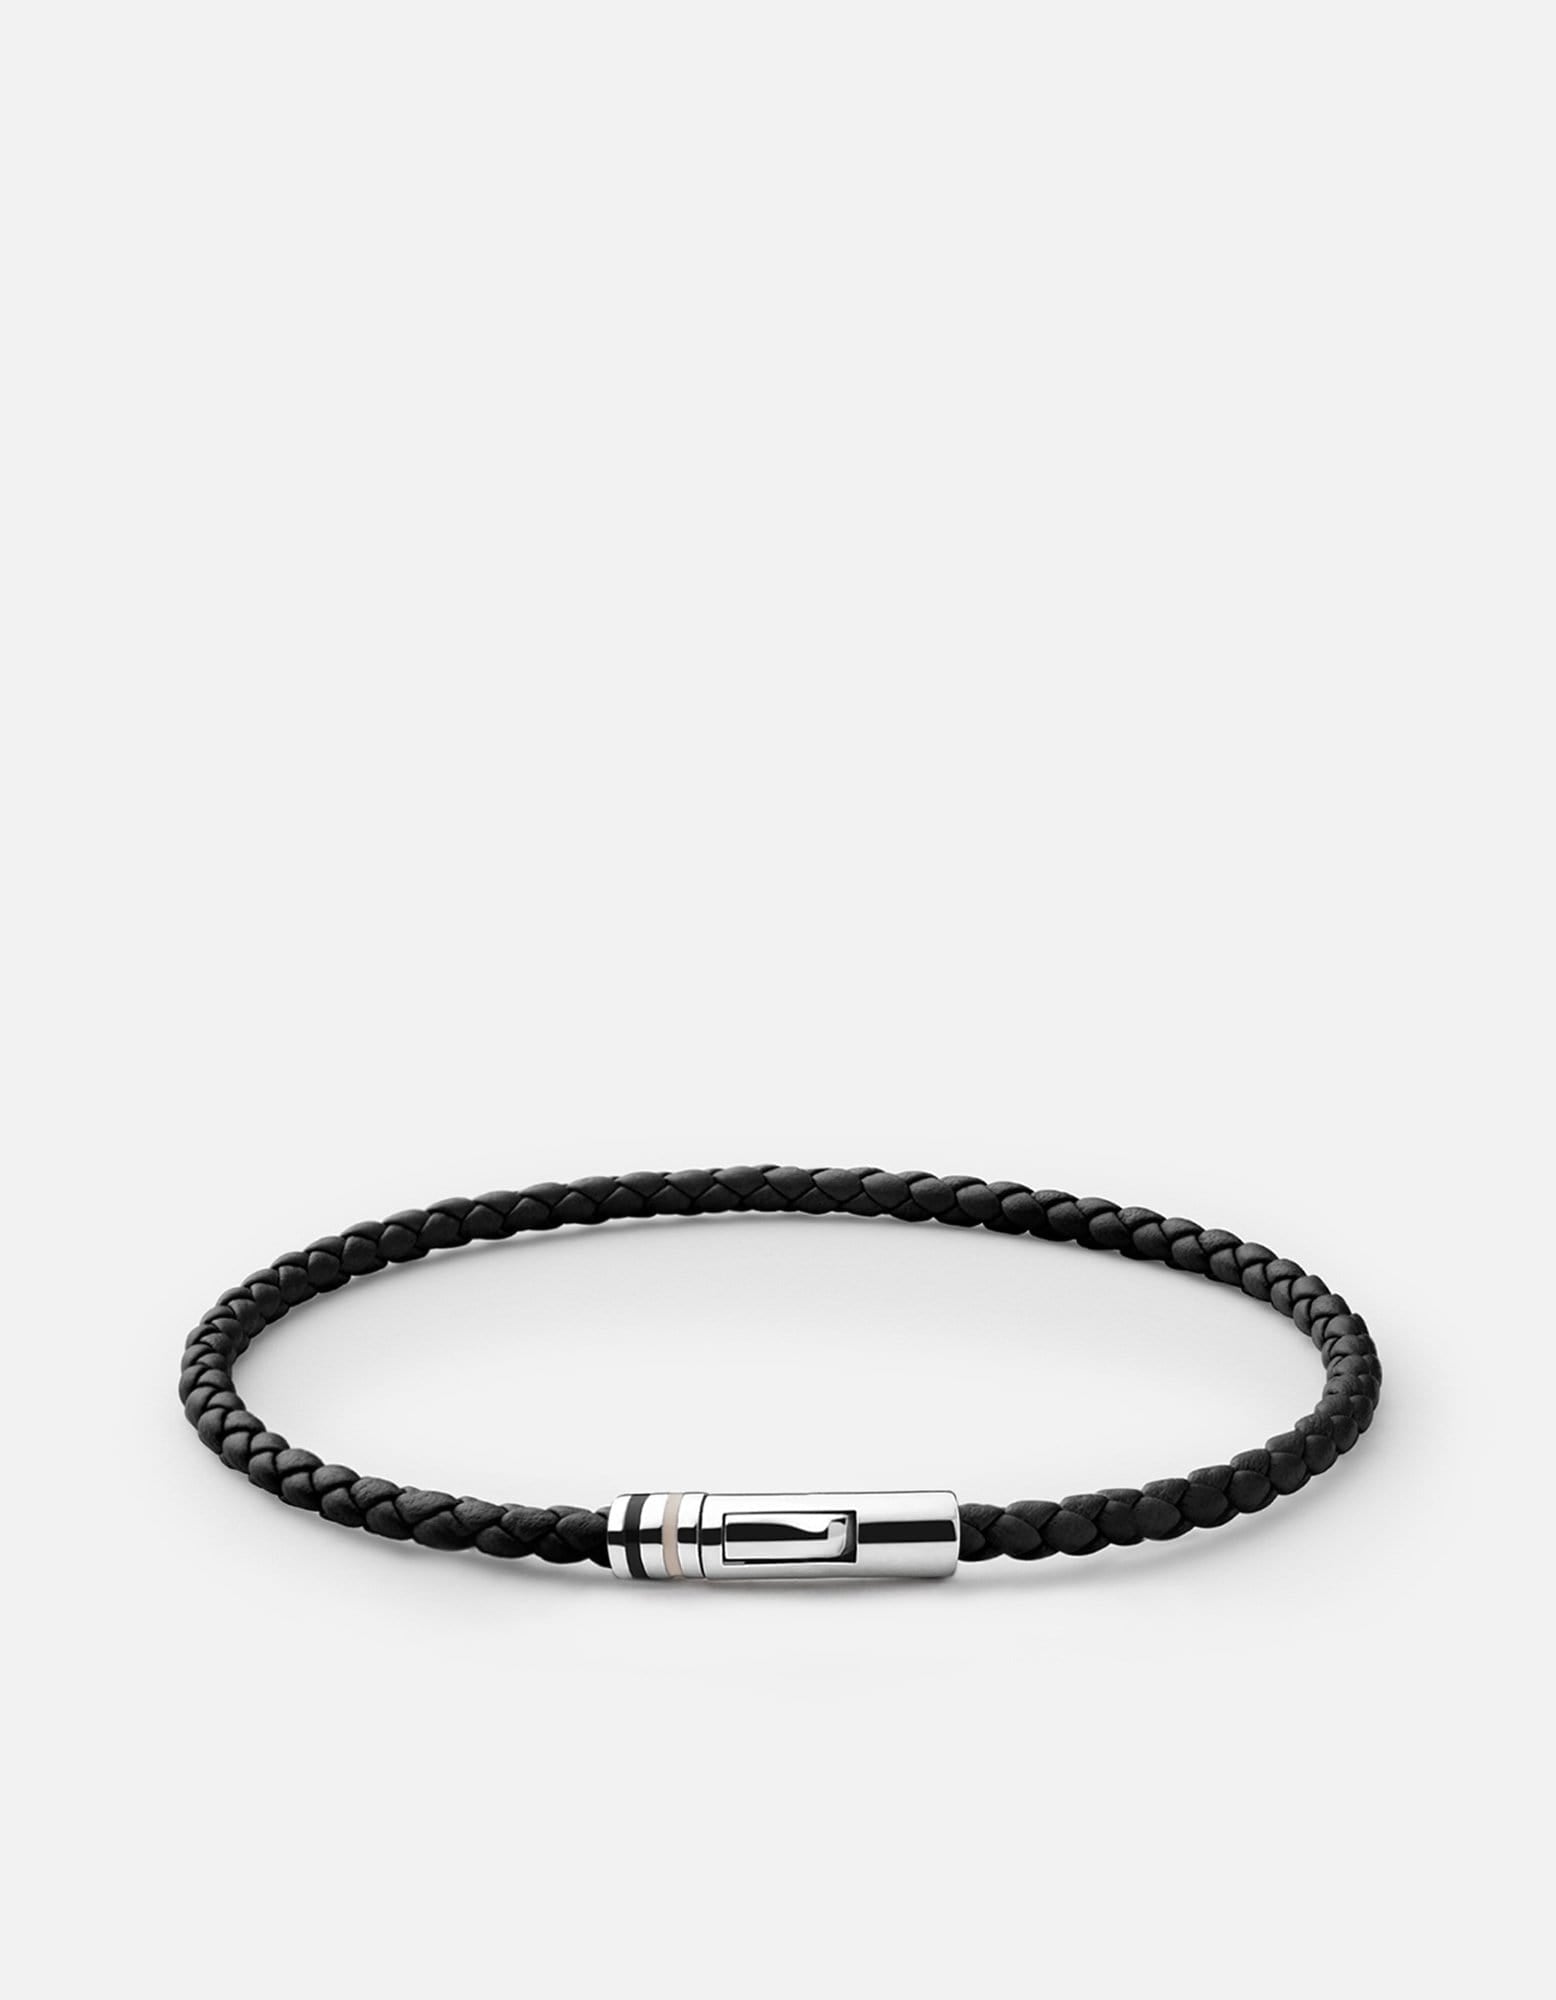 Image of Juno Leather Bracelet, Sterling Silver